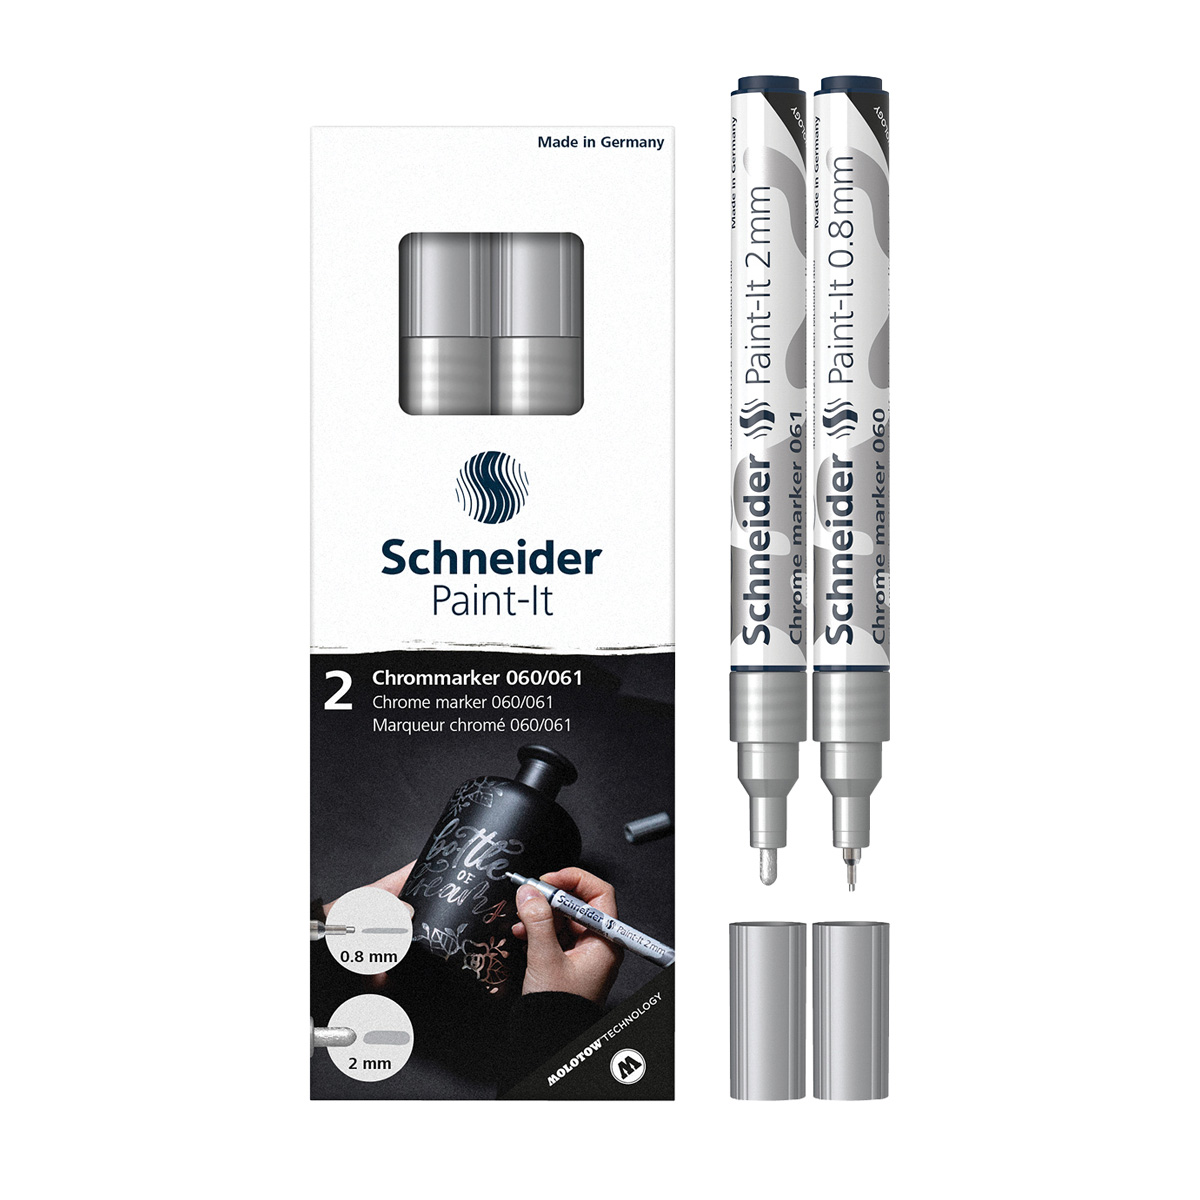 Маркеры для декорирования 2шт хром Schneider Paint-It 060/061 0,8мм + 2мм, картон. упаковка